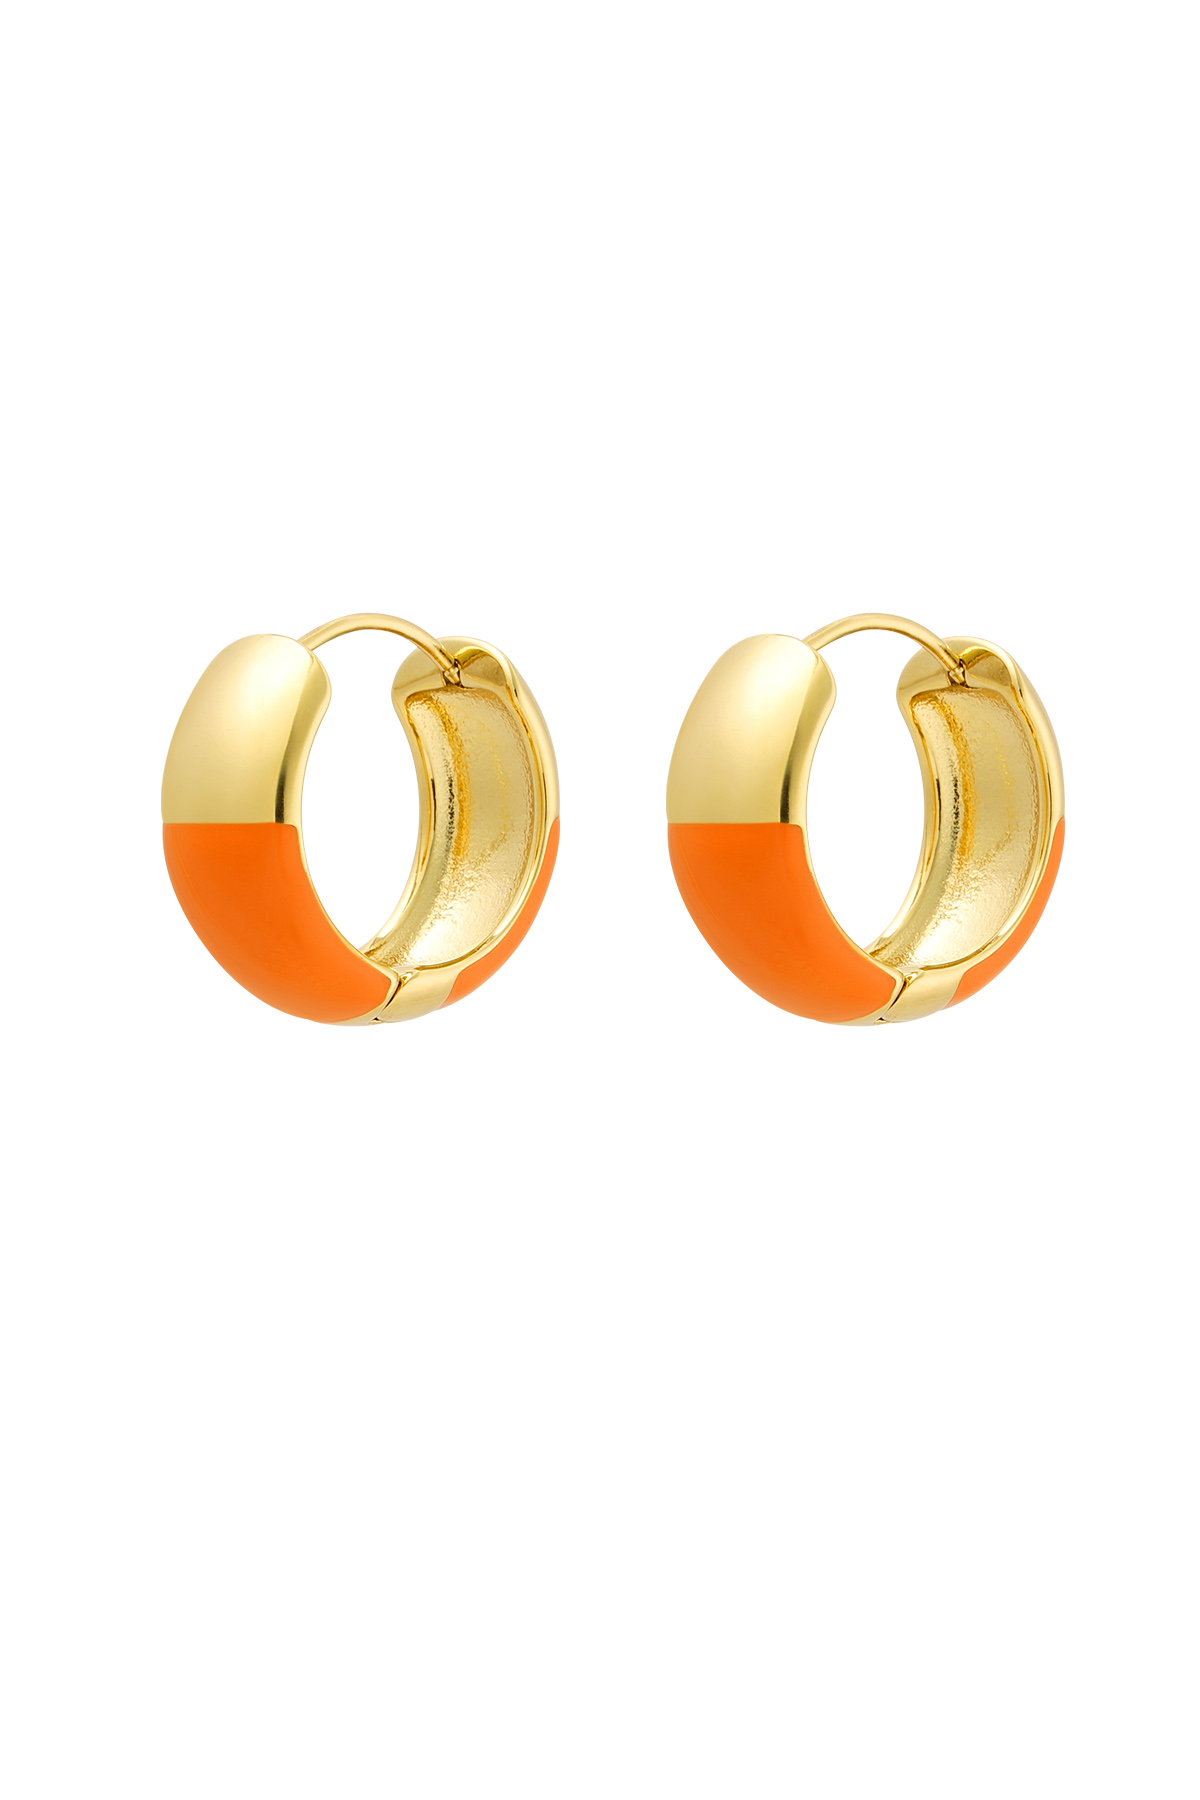 Earrings half colored - Orange & Gold Stainless Steel h5 